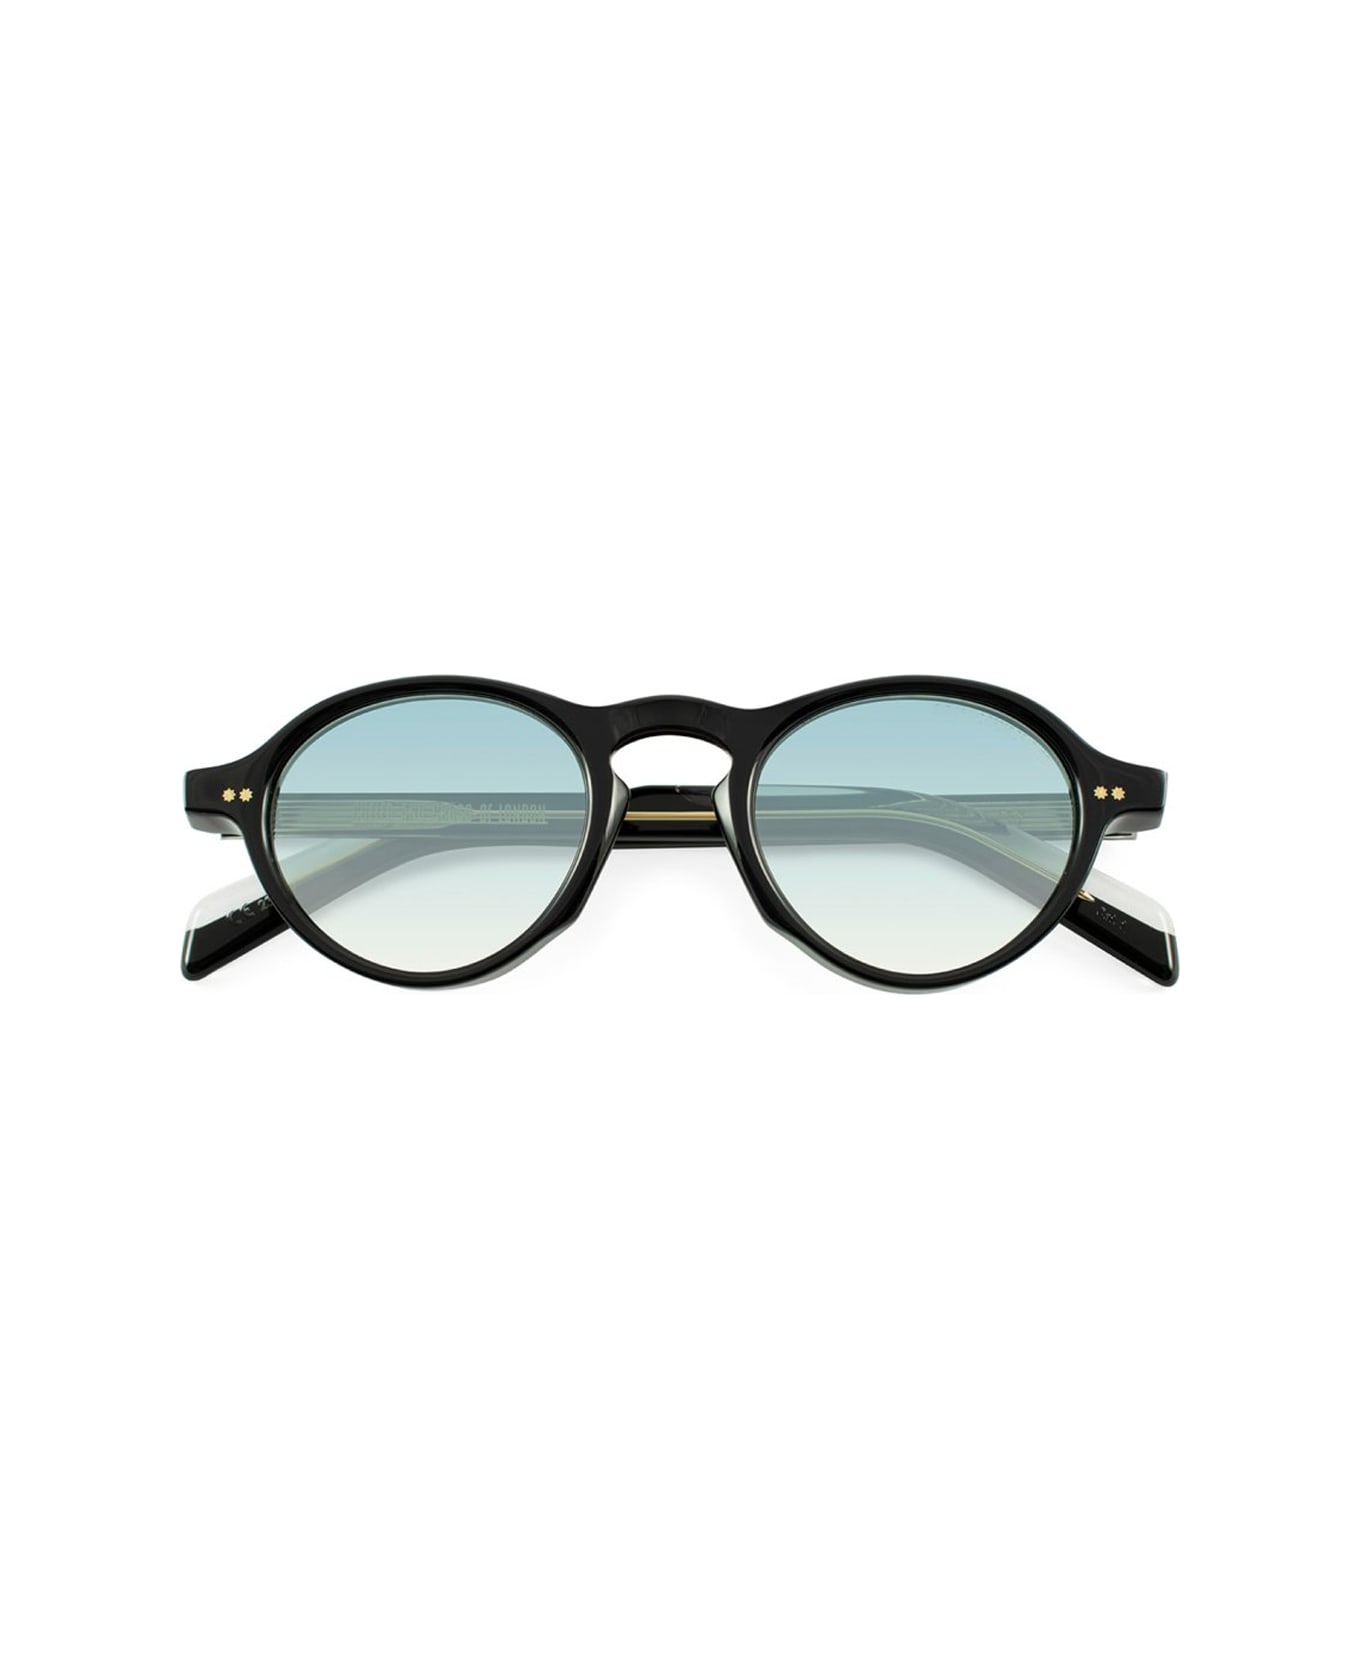 Cutler and Gross Gr08 01 Black Sunglasses - Nero サングラス